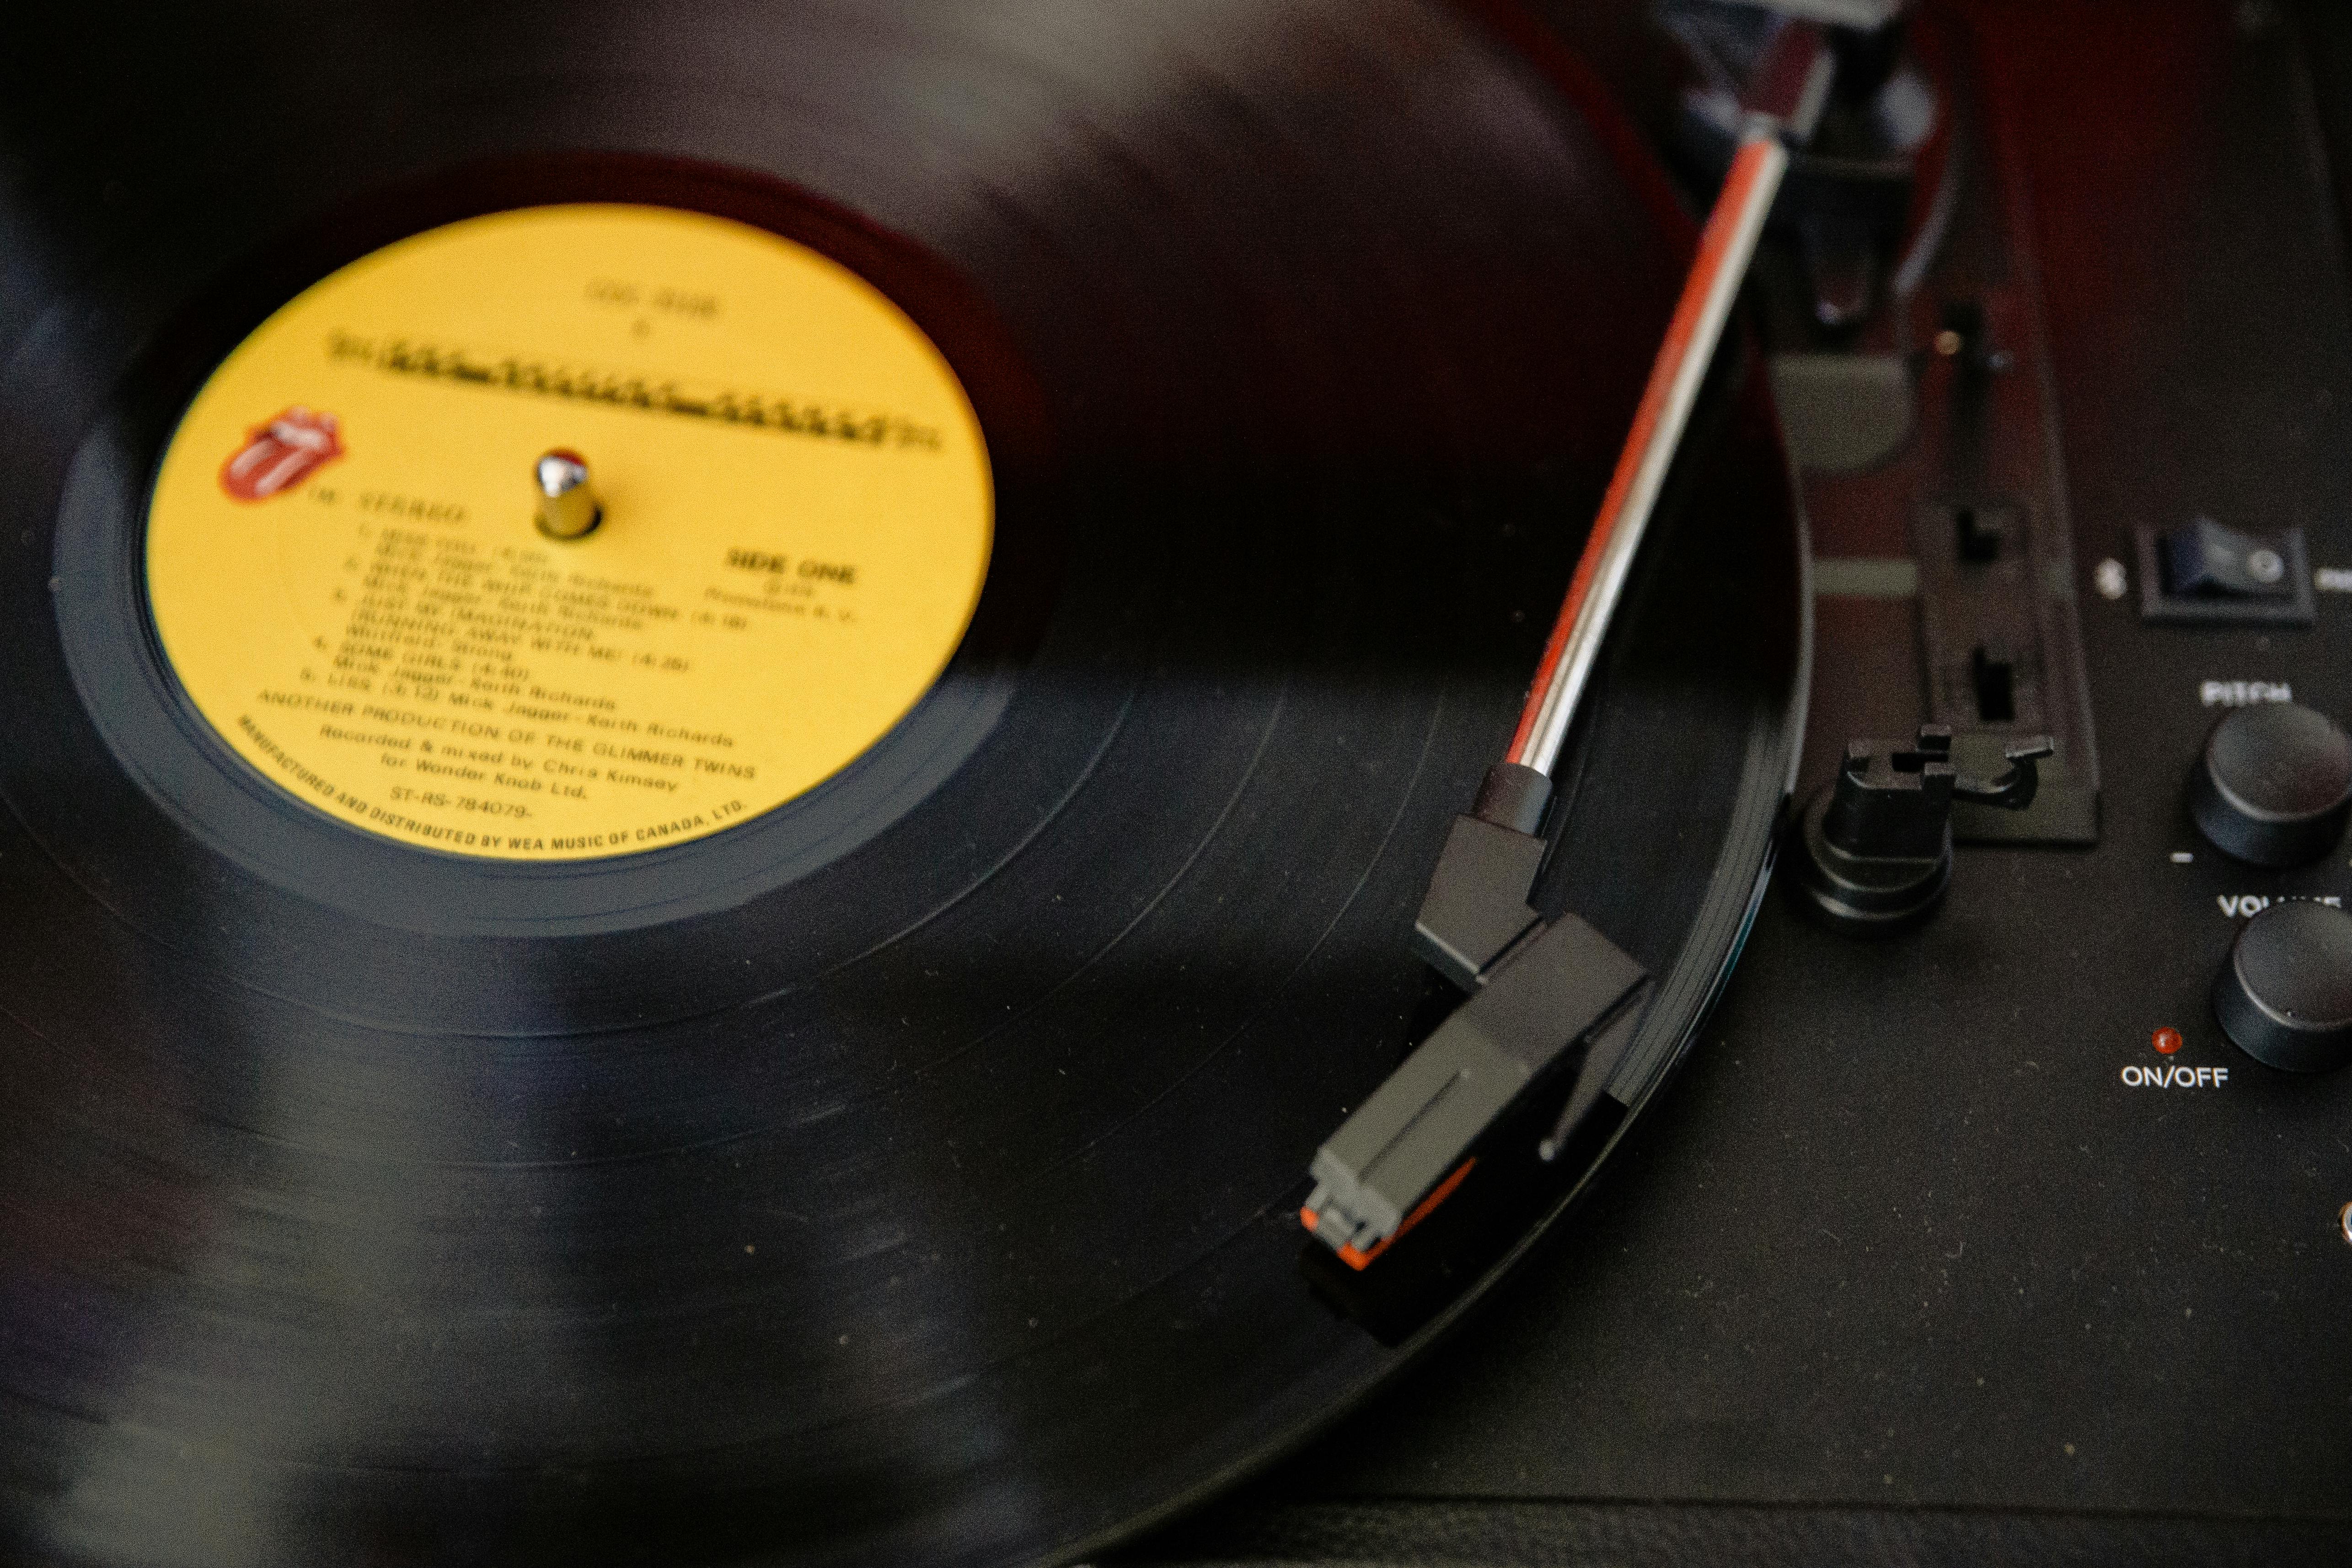 Black Vinyl Record On Vinyl Record Player · Free Stock Photo